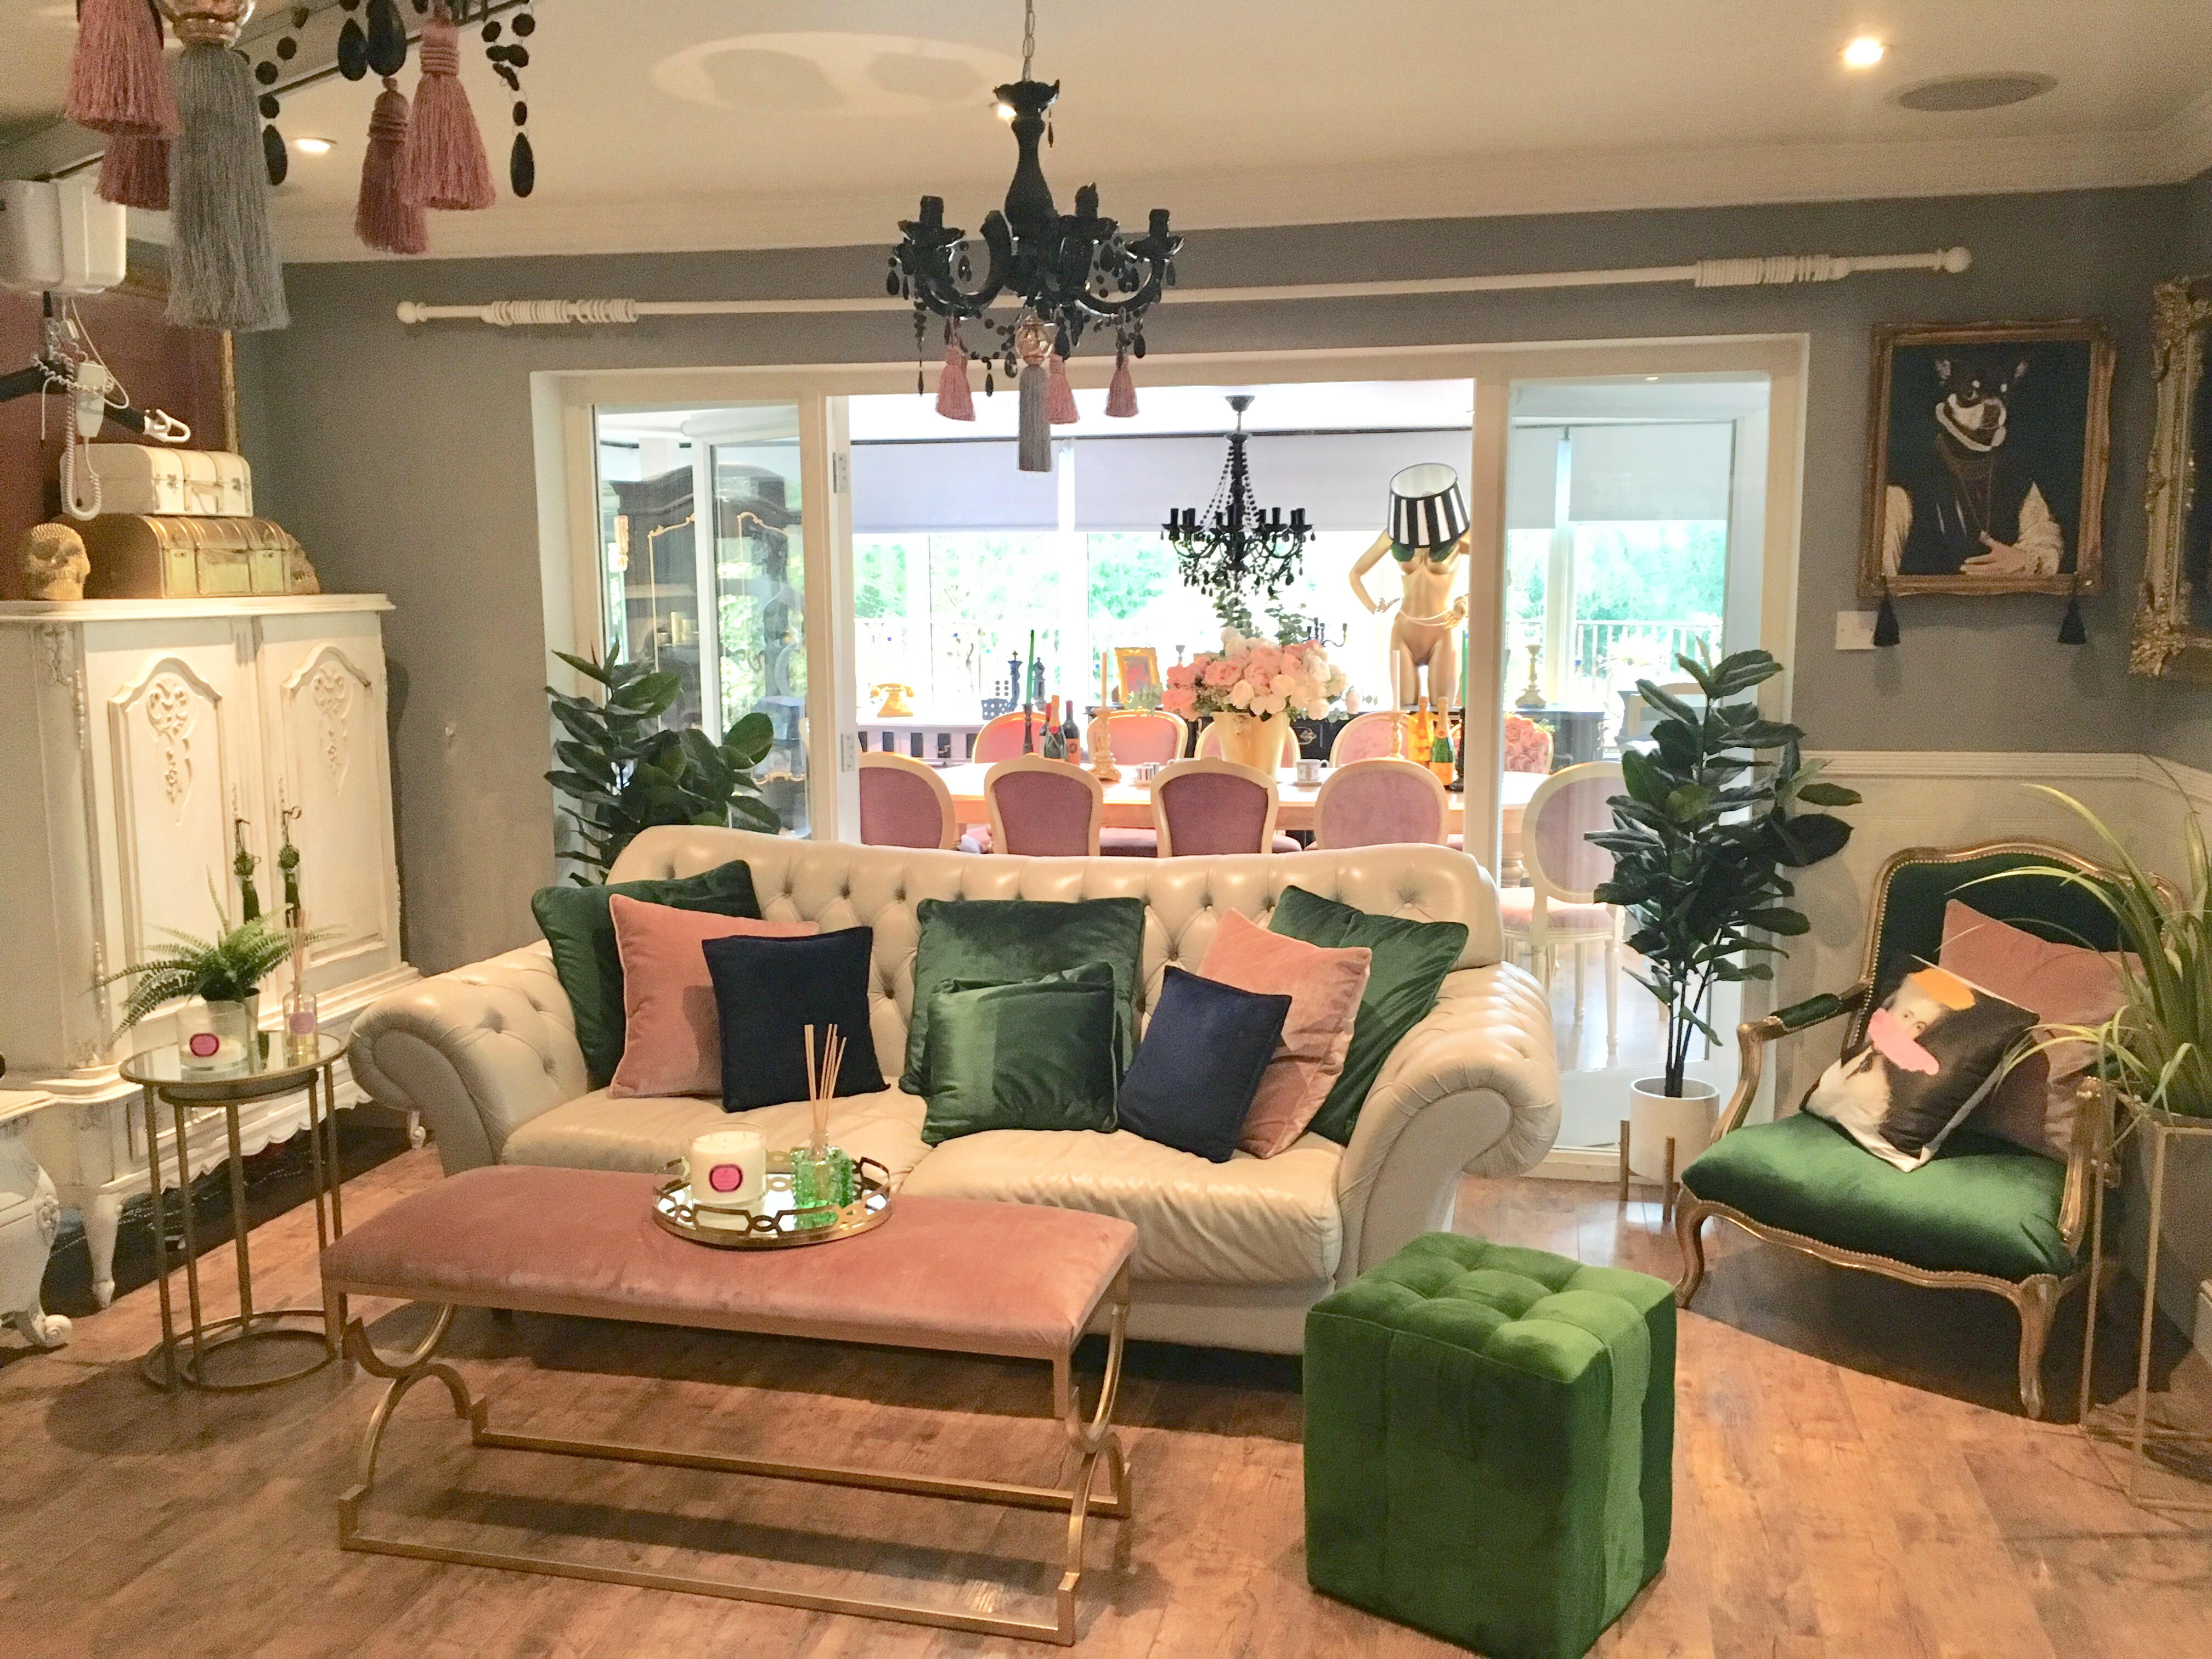 House tour- opulent and eccentric décor. Glam living room - pink velvet.